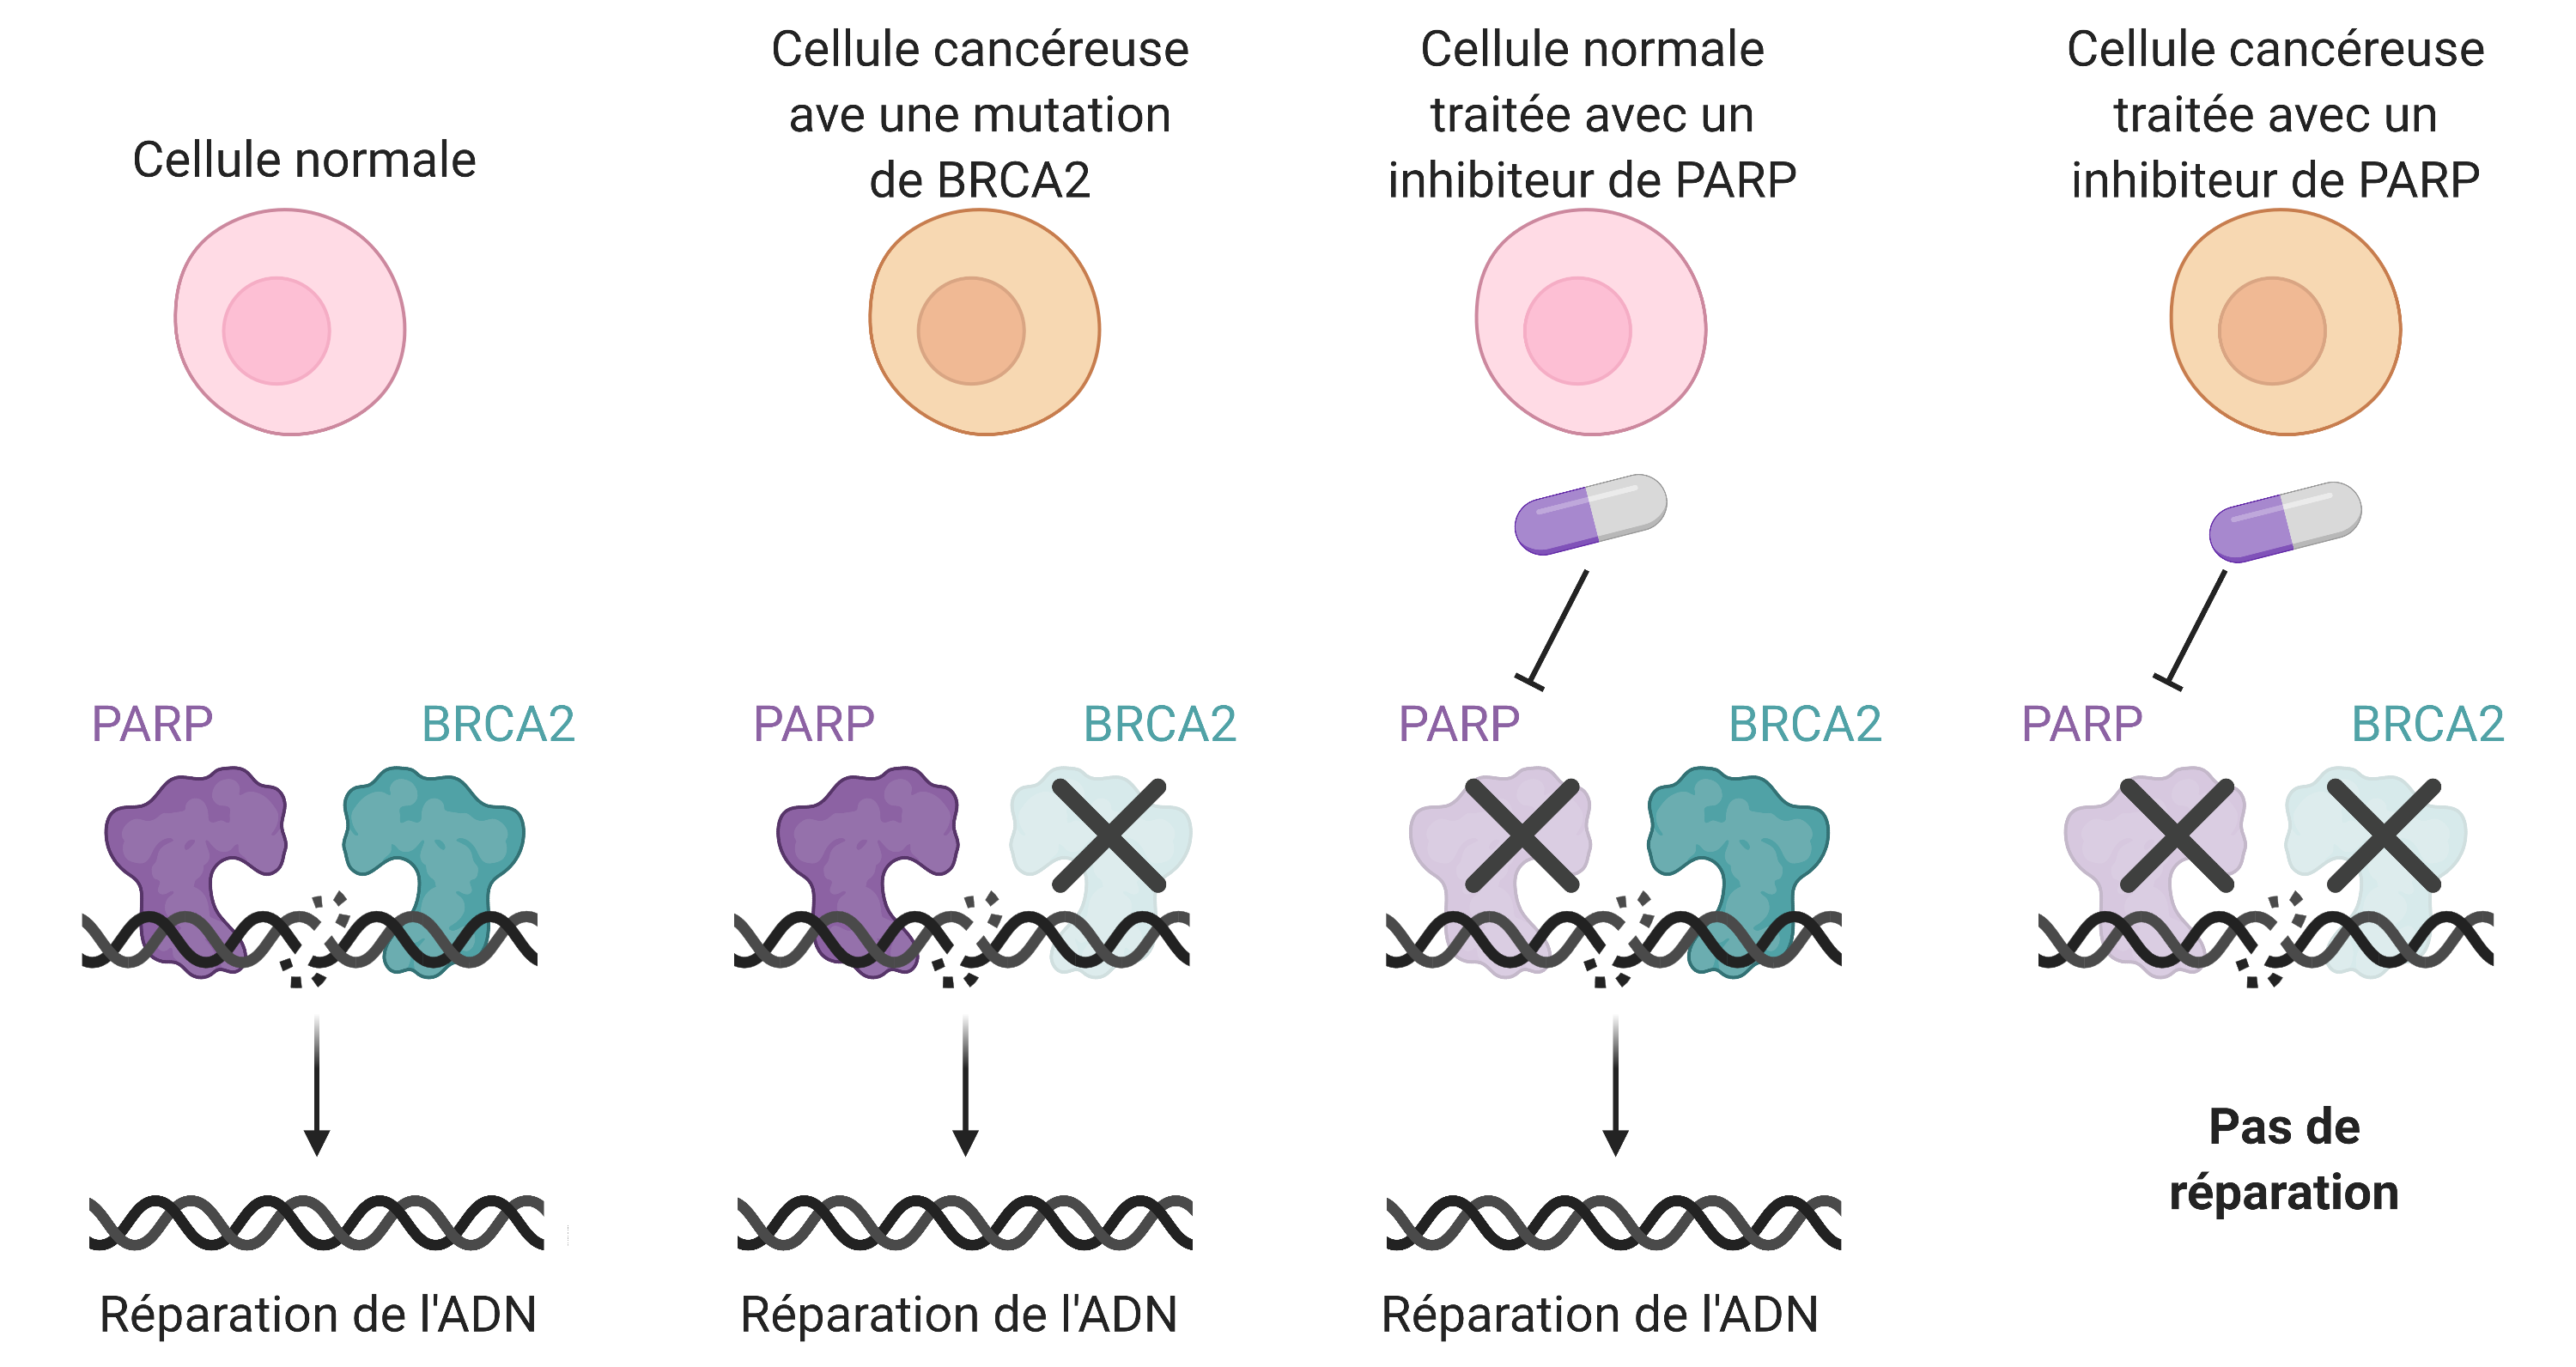 BRCA2 and PARP